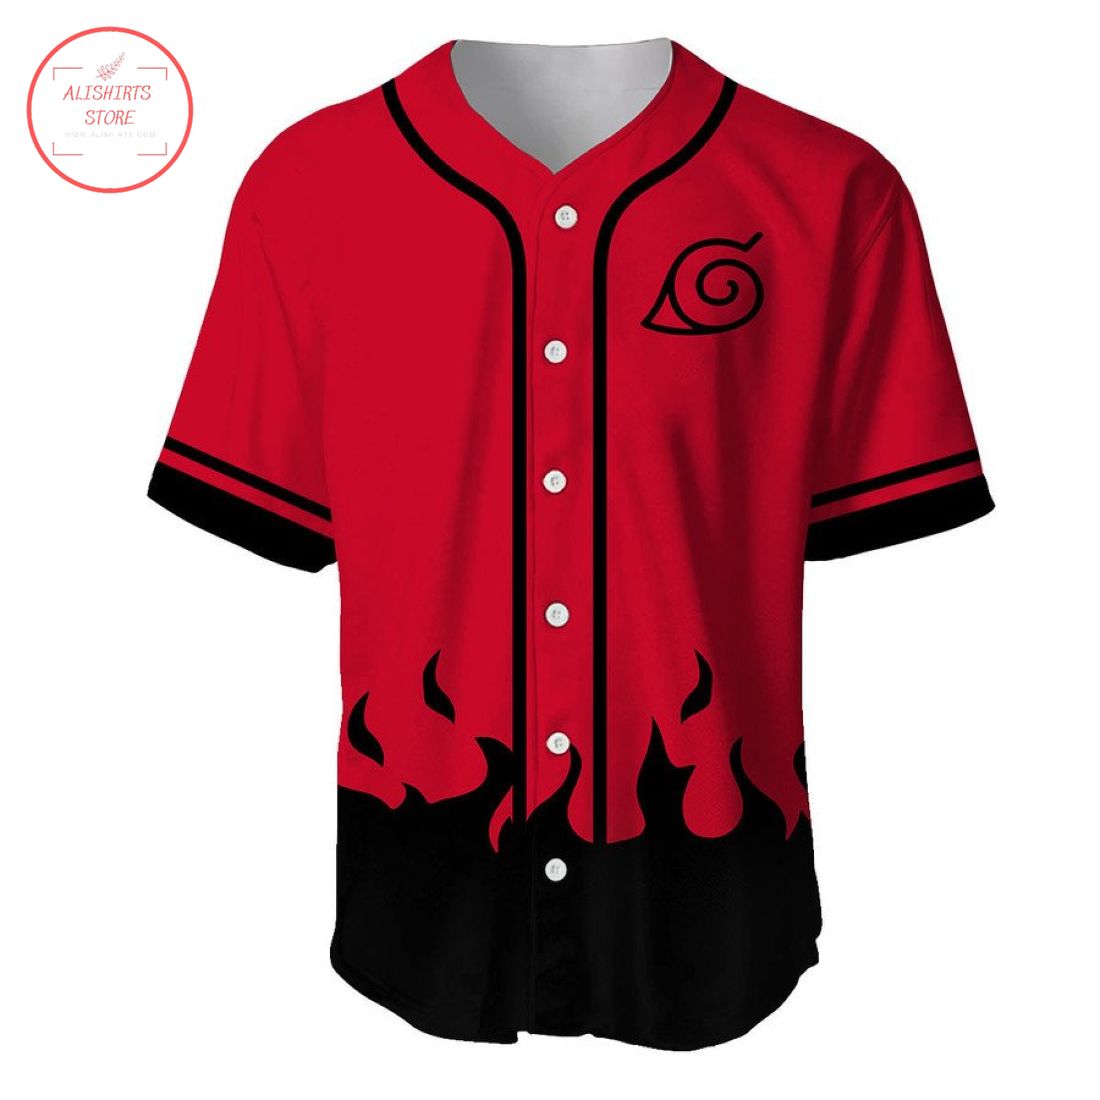 Naruto Akatsuki Red Baseball Jersey